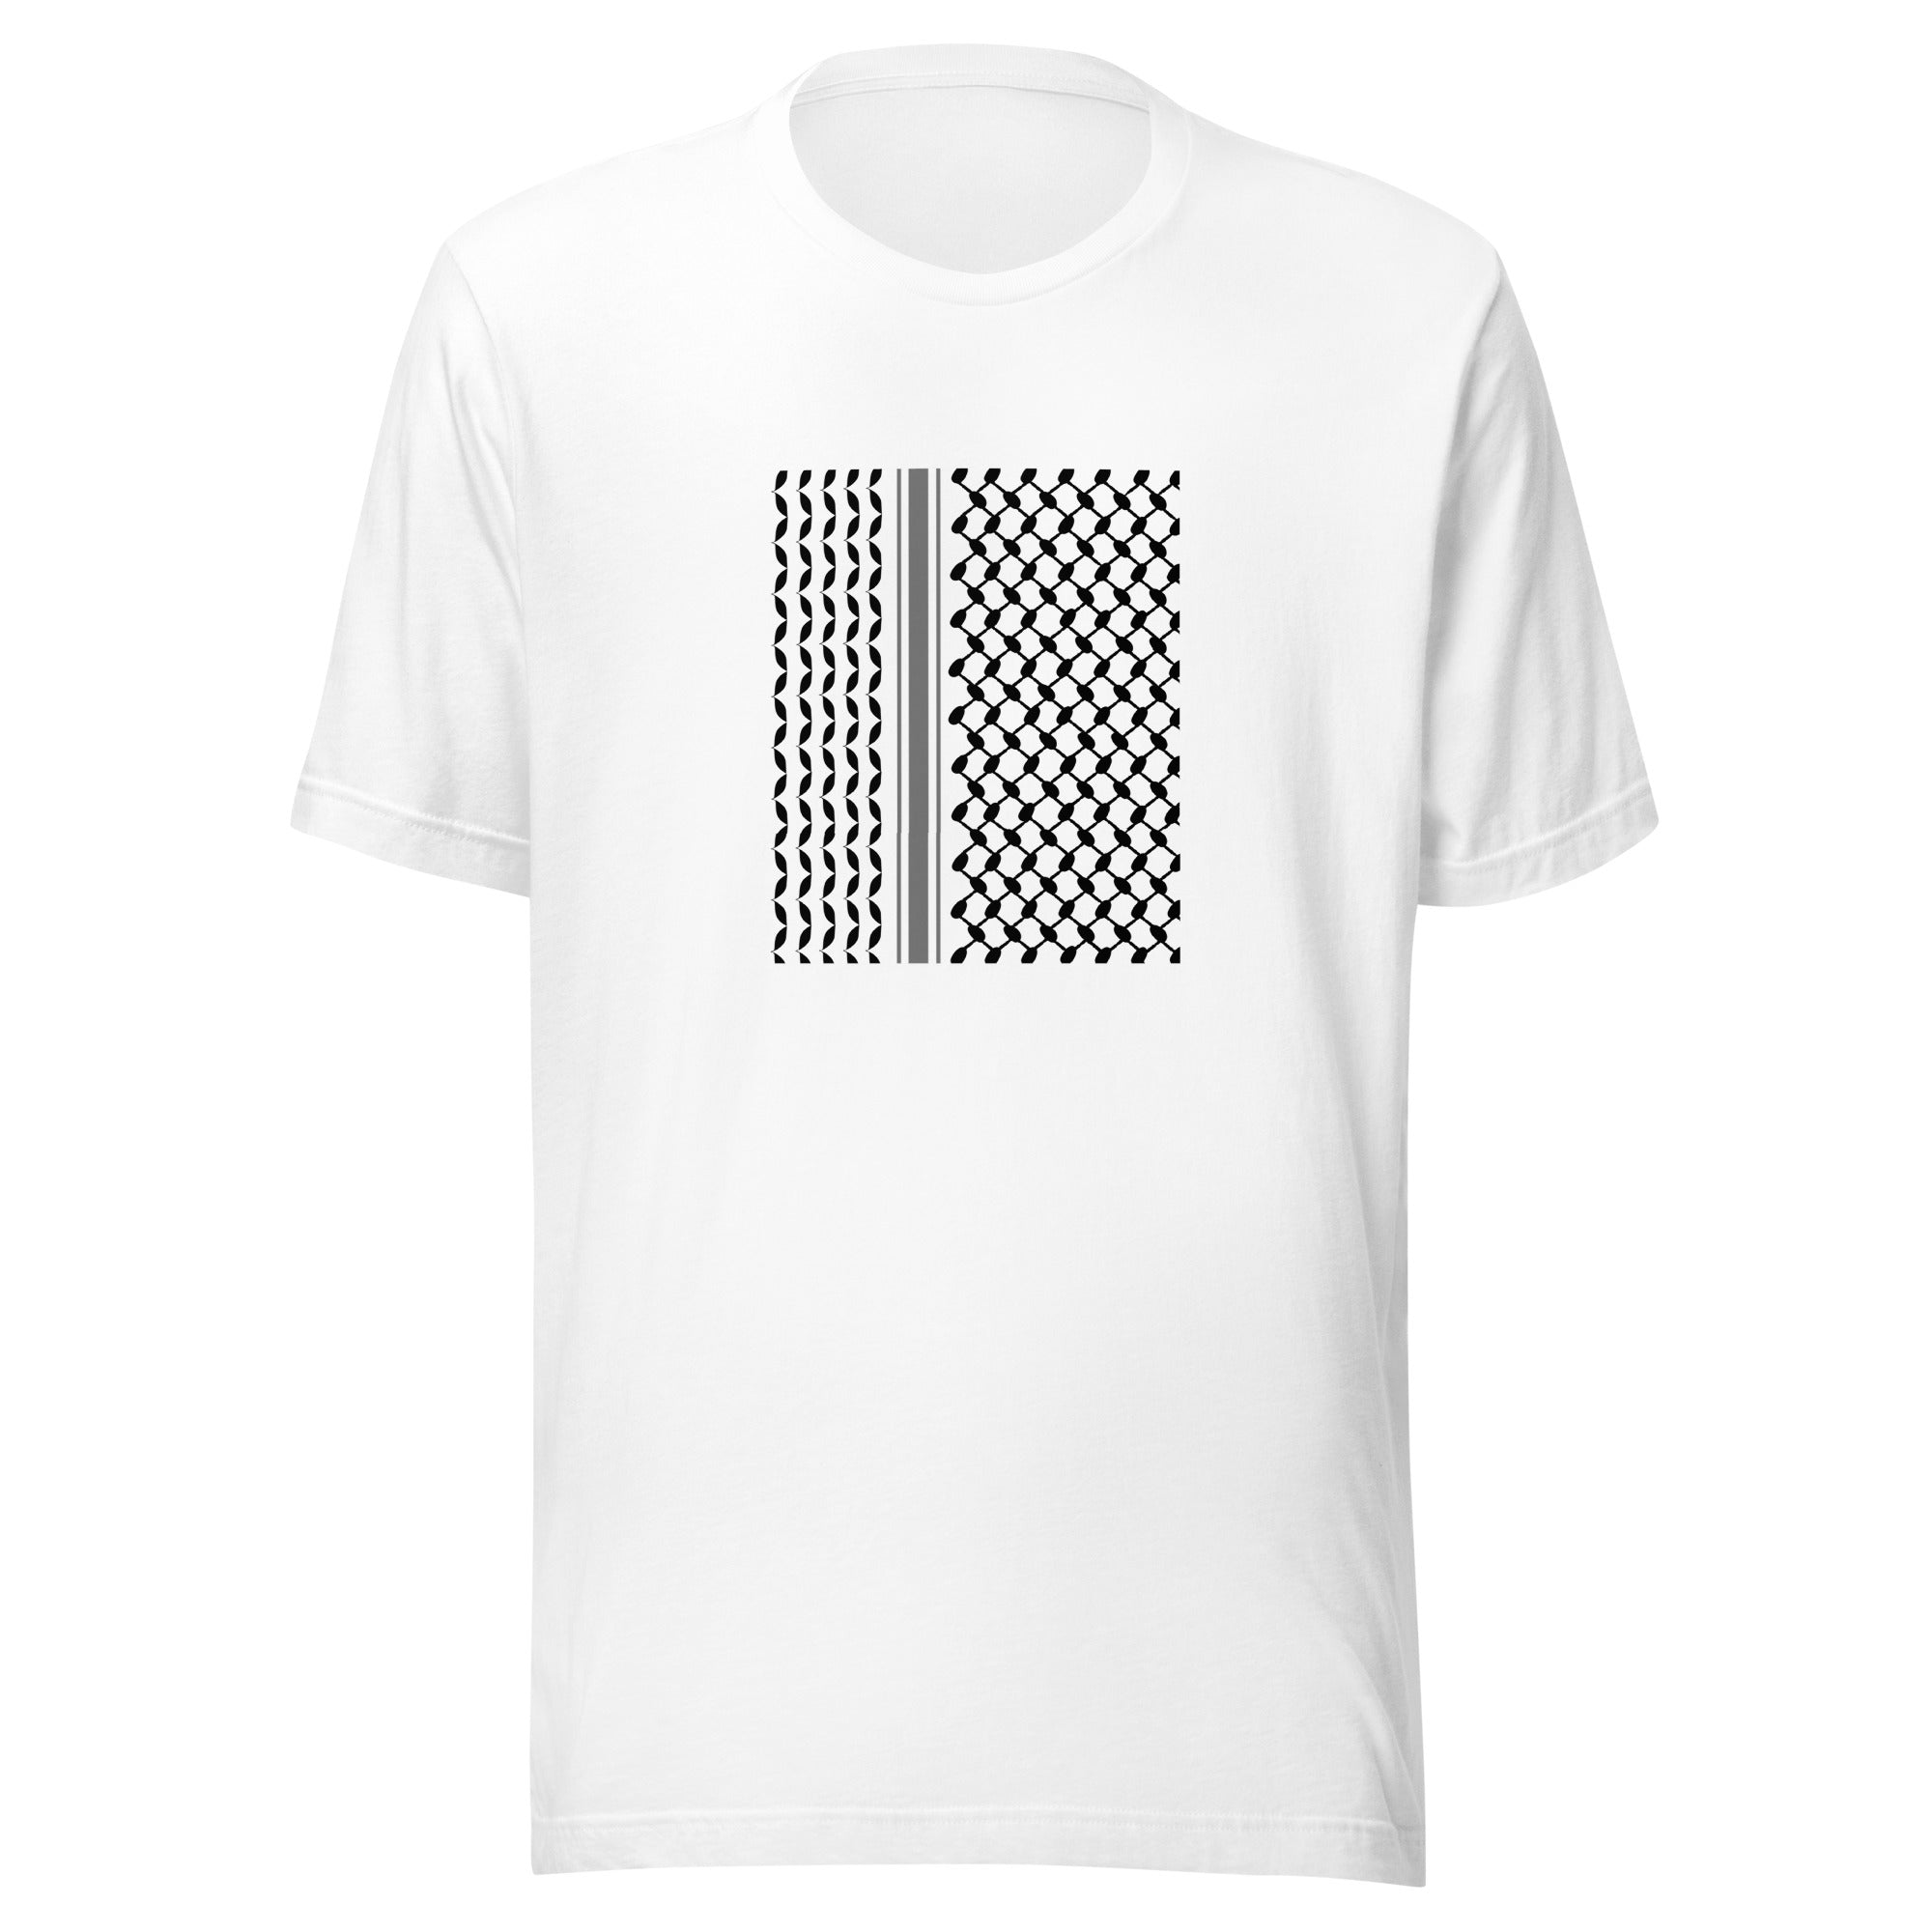 unisex-staple-t-shirt-white-front-663cb5e0a58f3.jpg